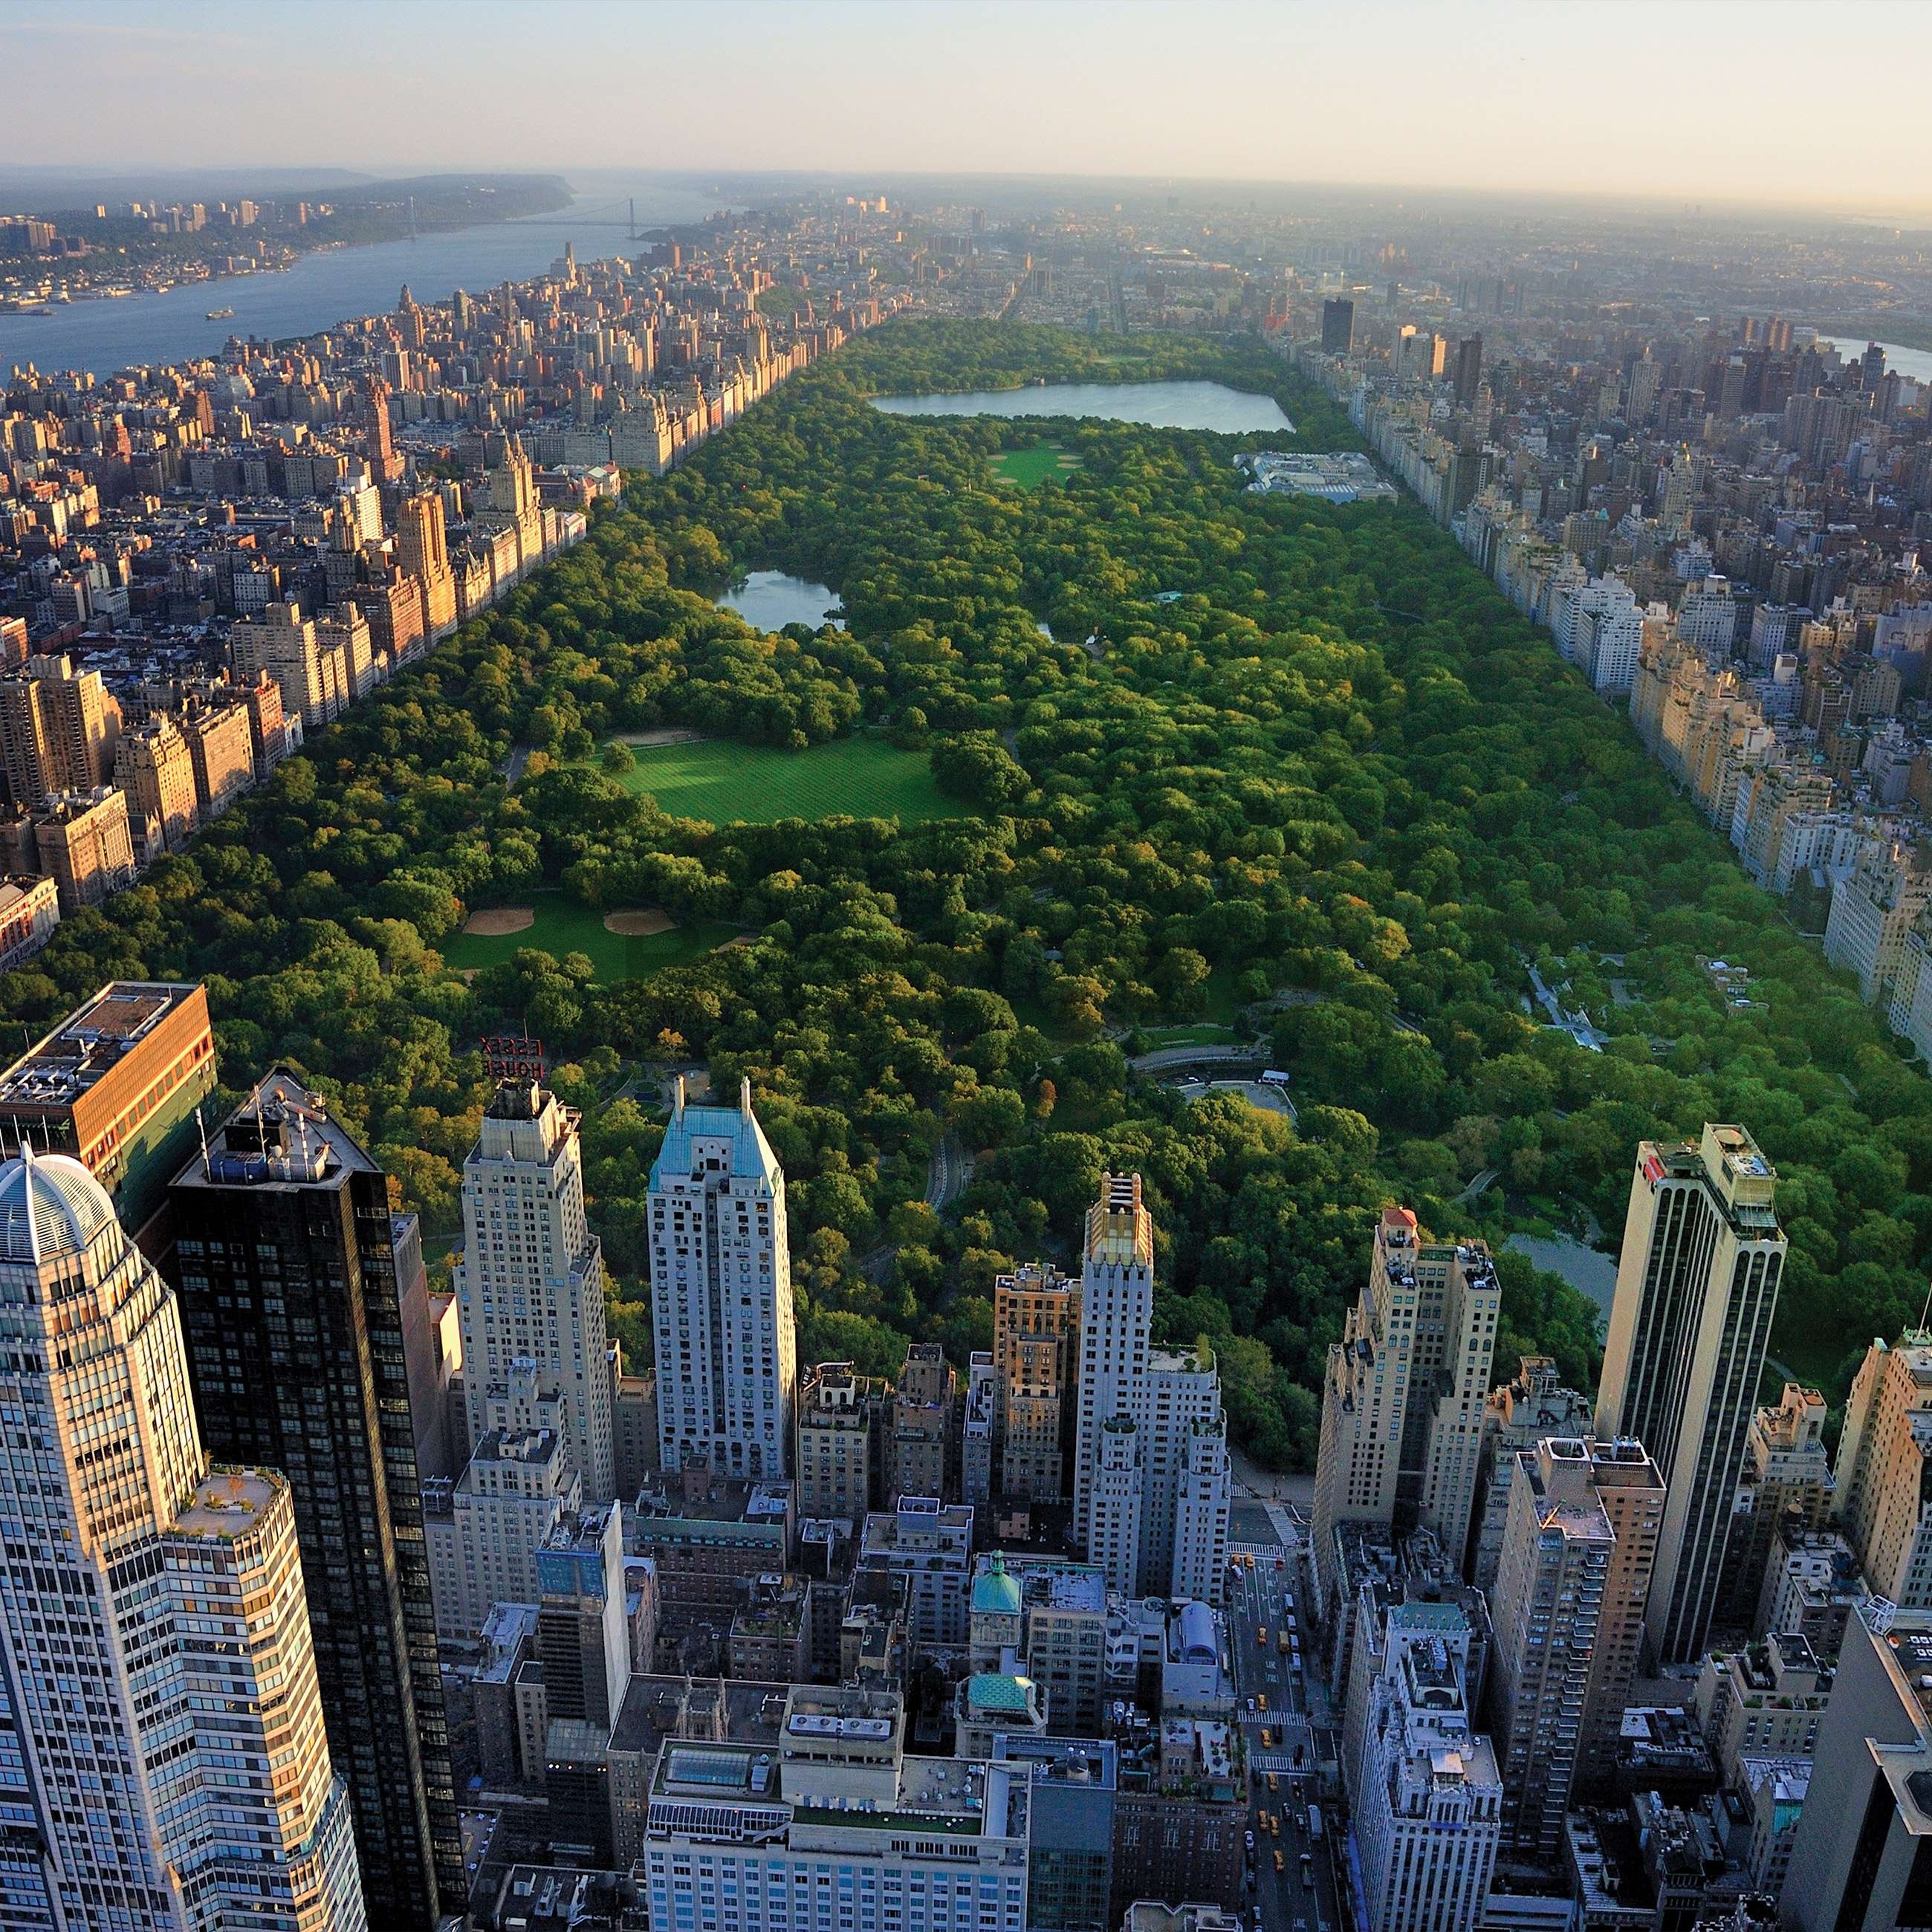 Fototapet vlies: New York Central Park - 368x254 cm